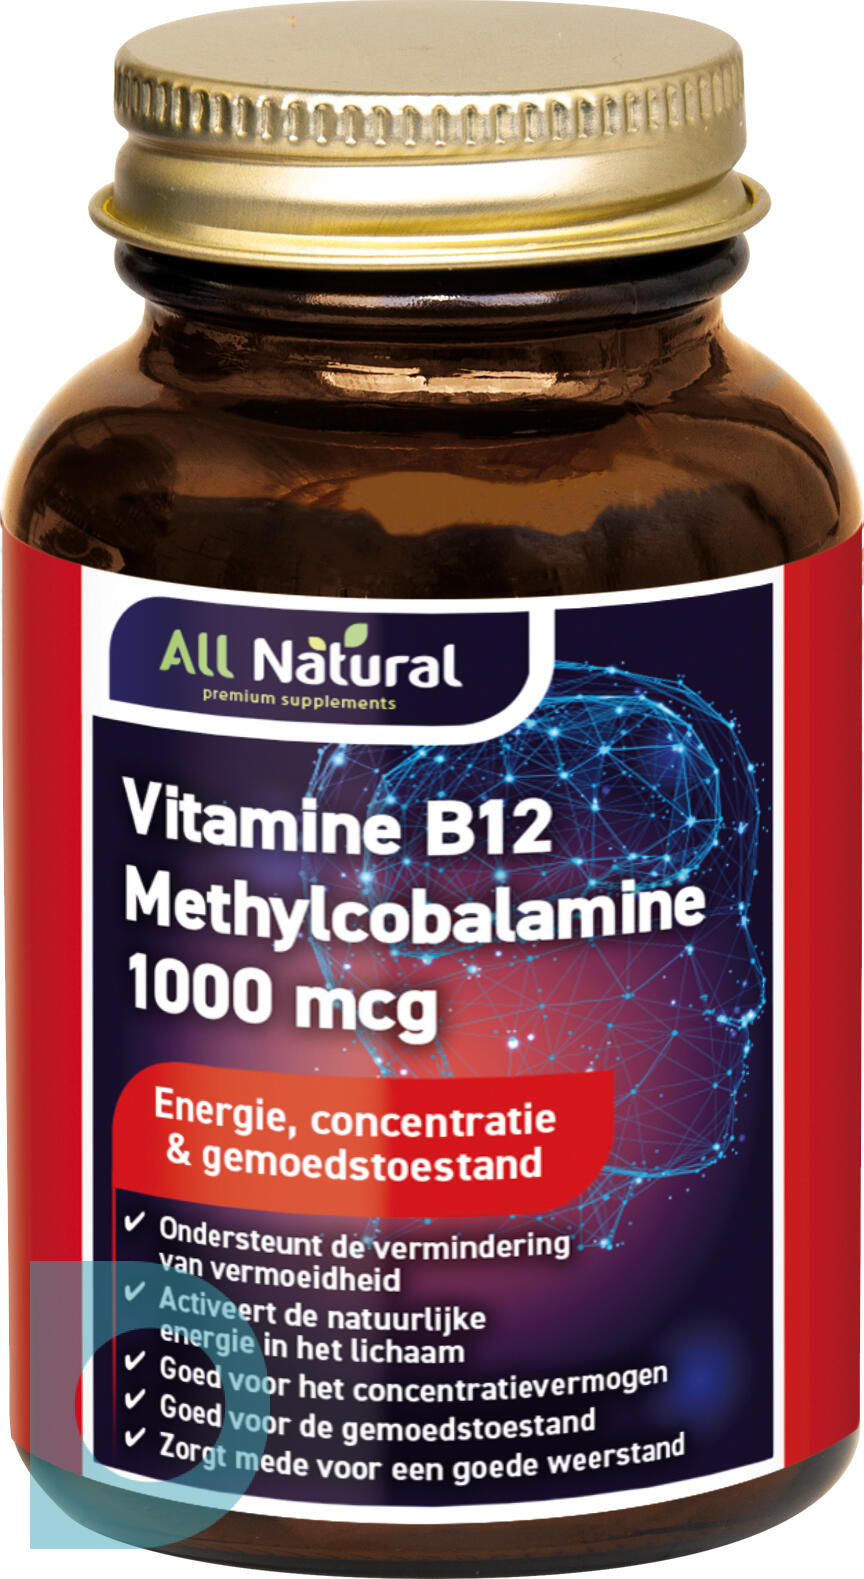 All Natural Vitamine B12 Methylcobalamine Kauwtabletten kopen Onl